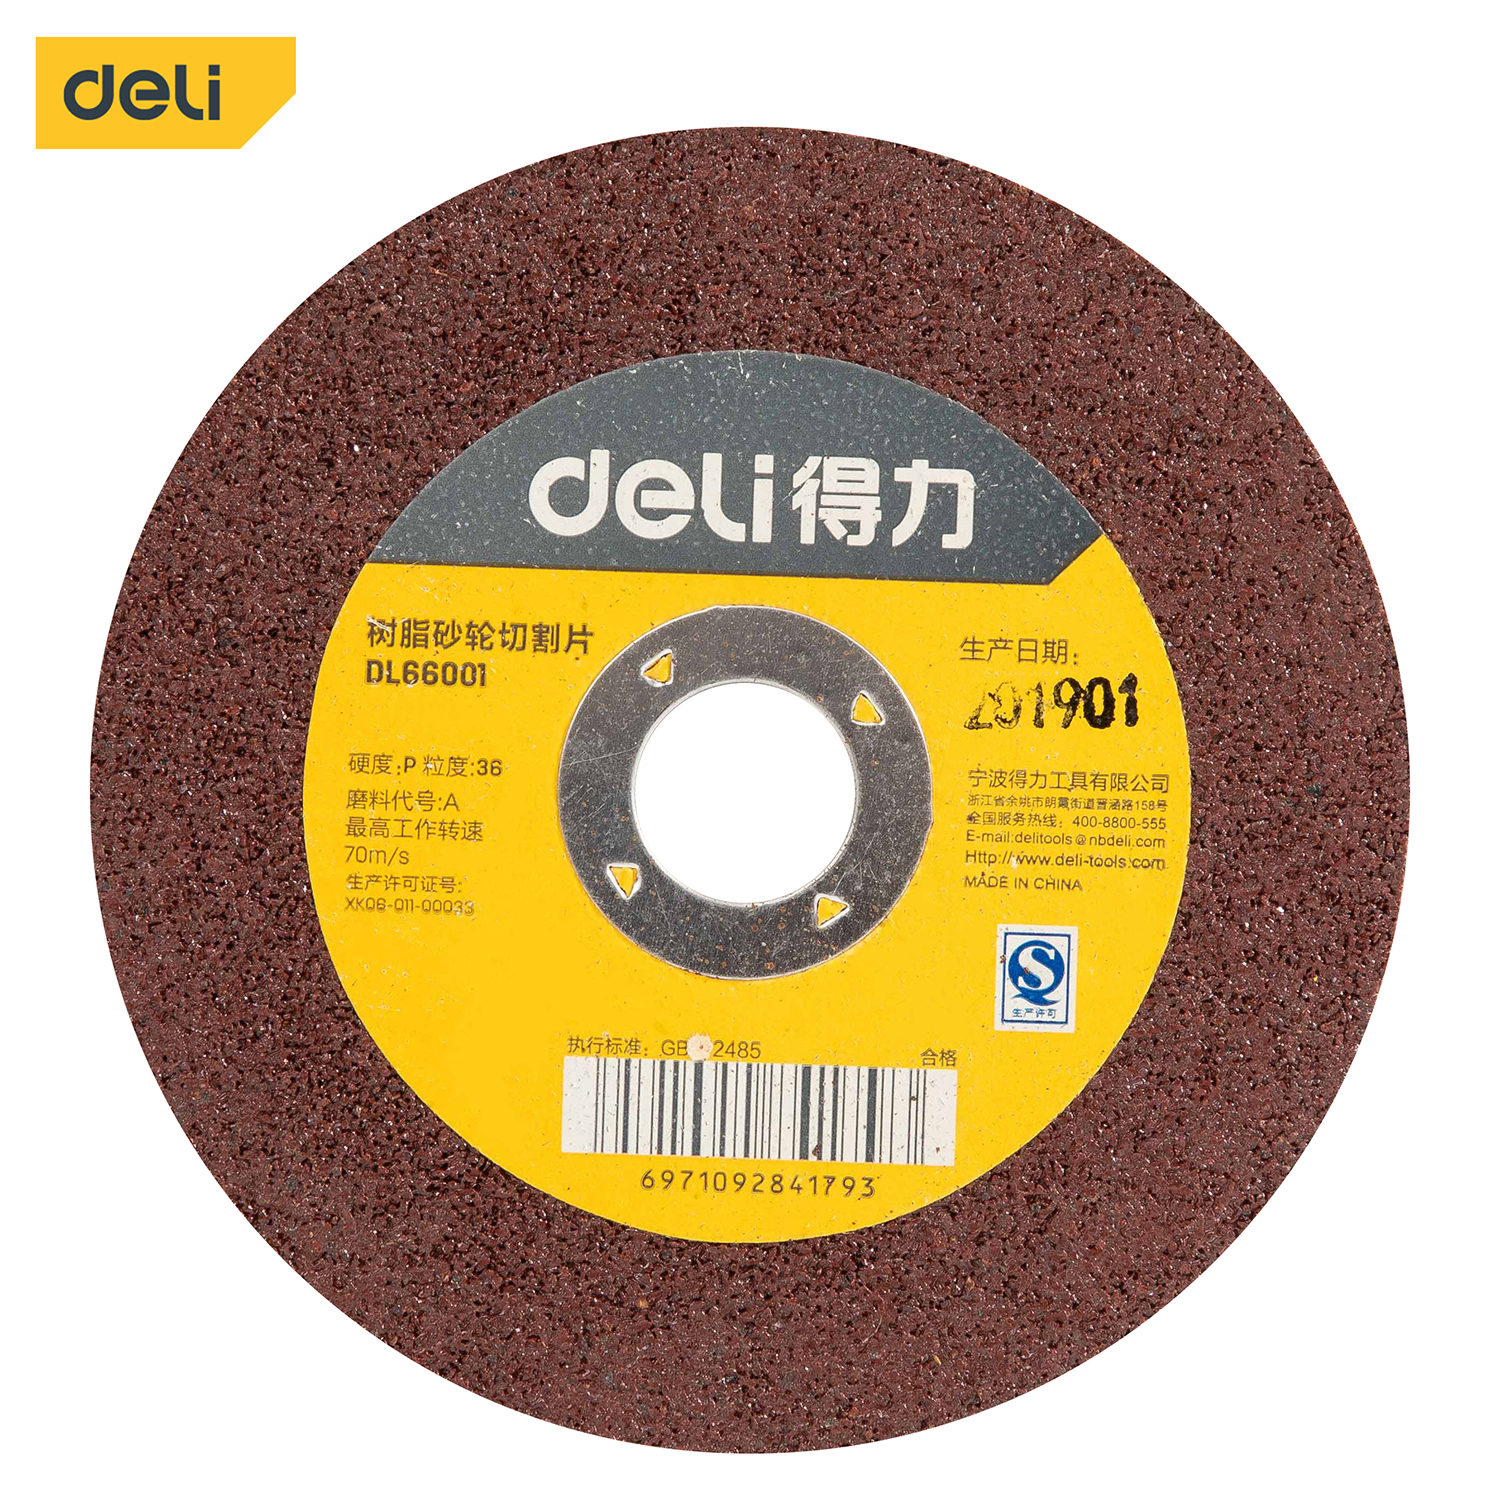 Deli-DL66001 Resin Cut-off Wheel